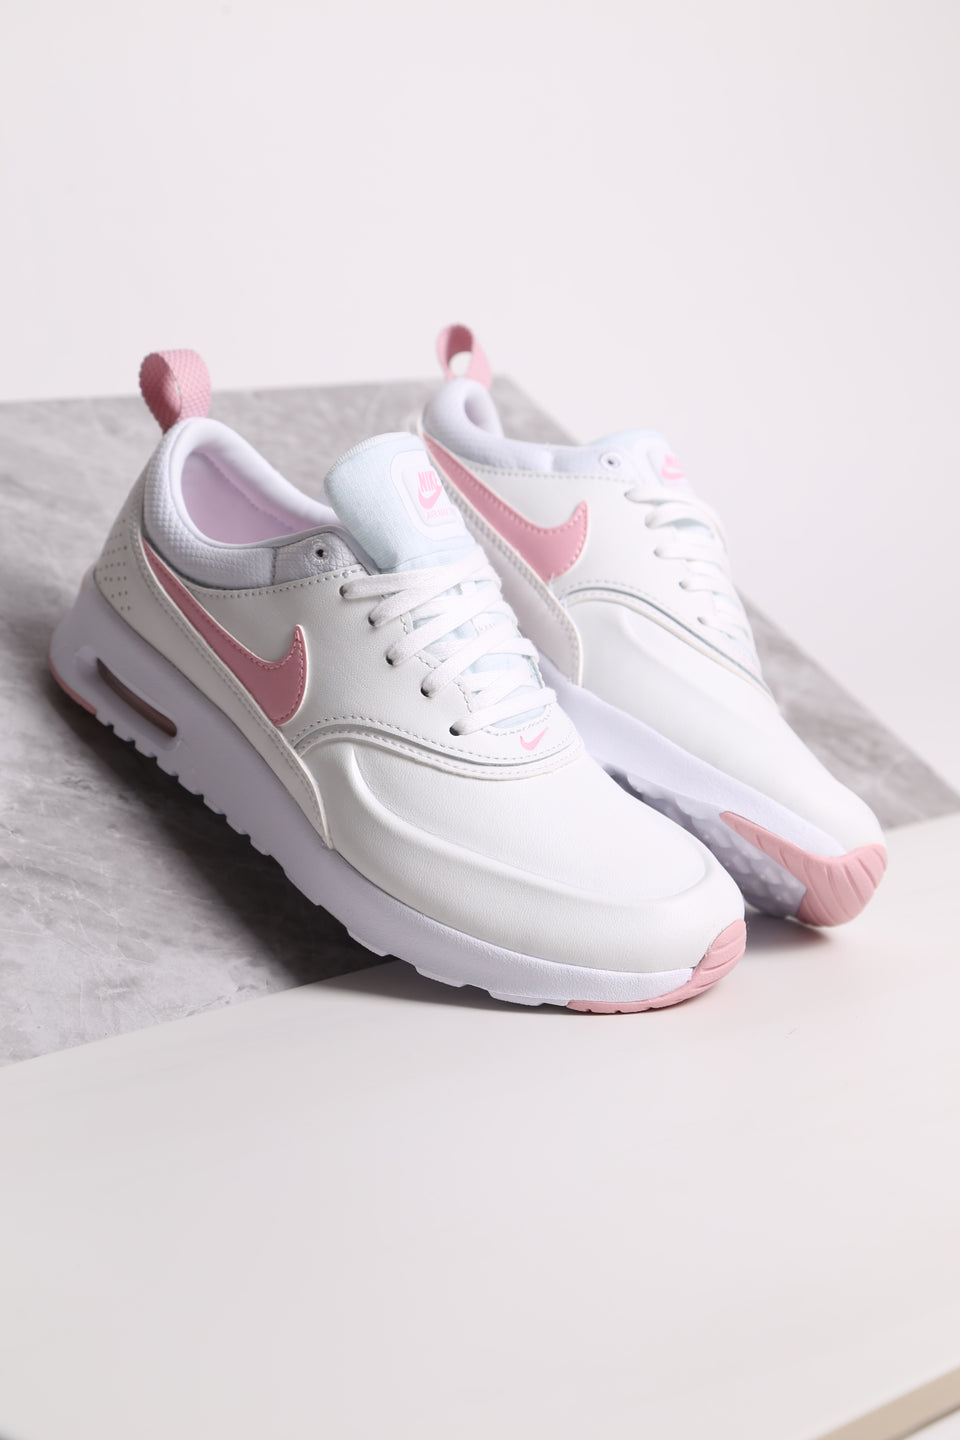 Nike Air Max Thea PRM - White Pearl Pink